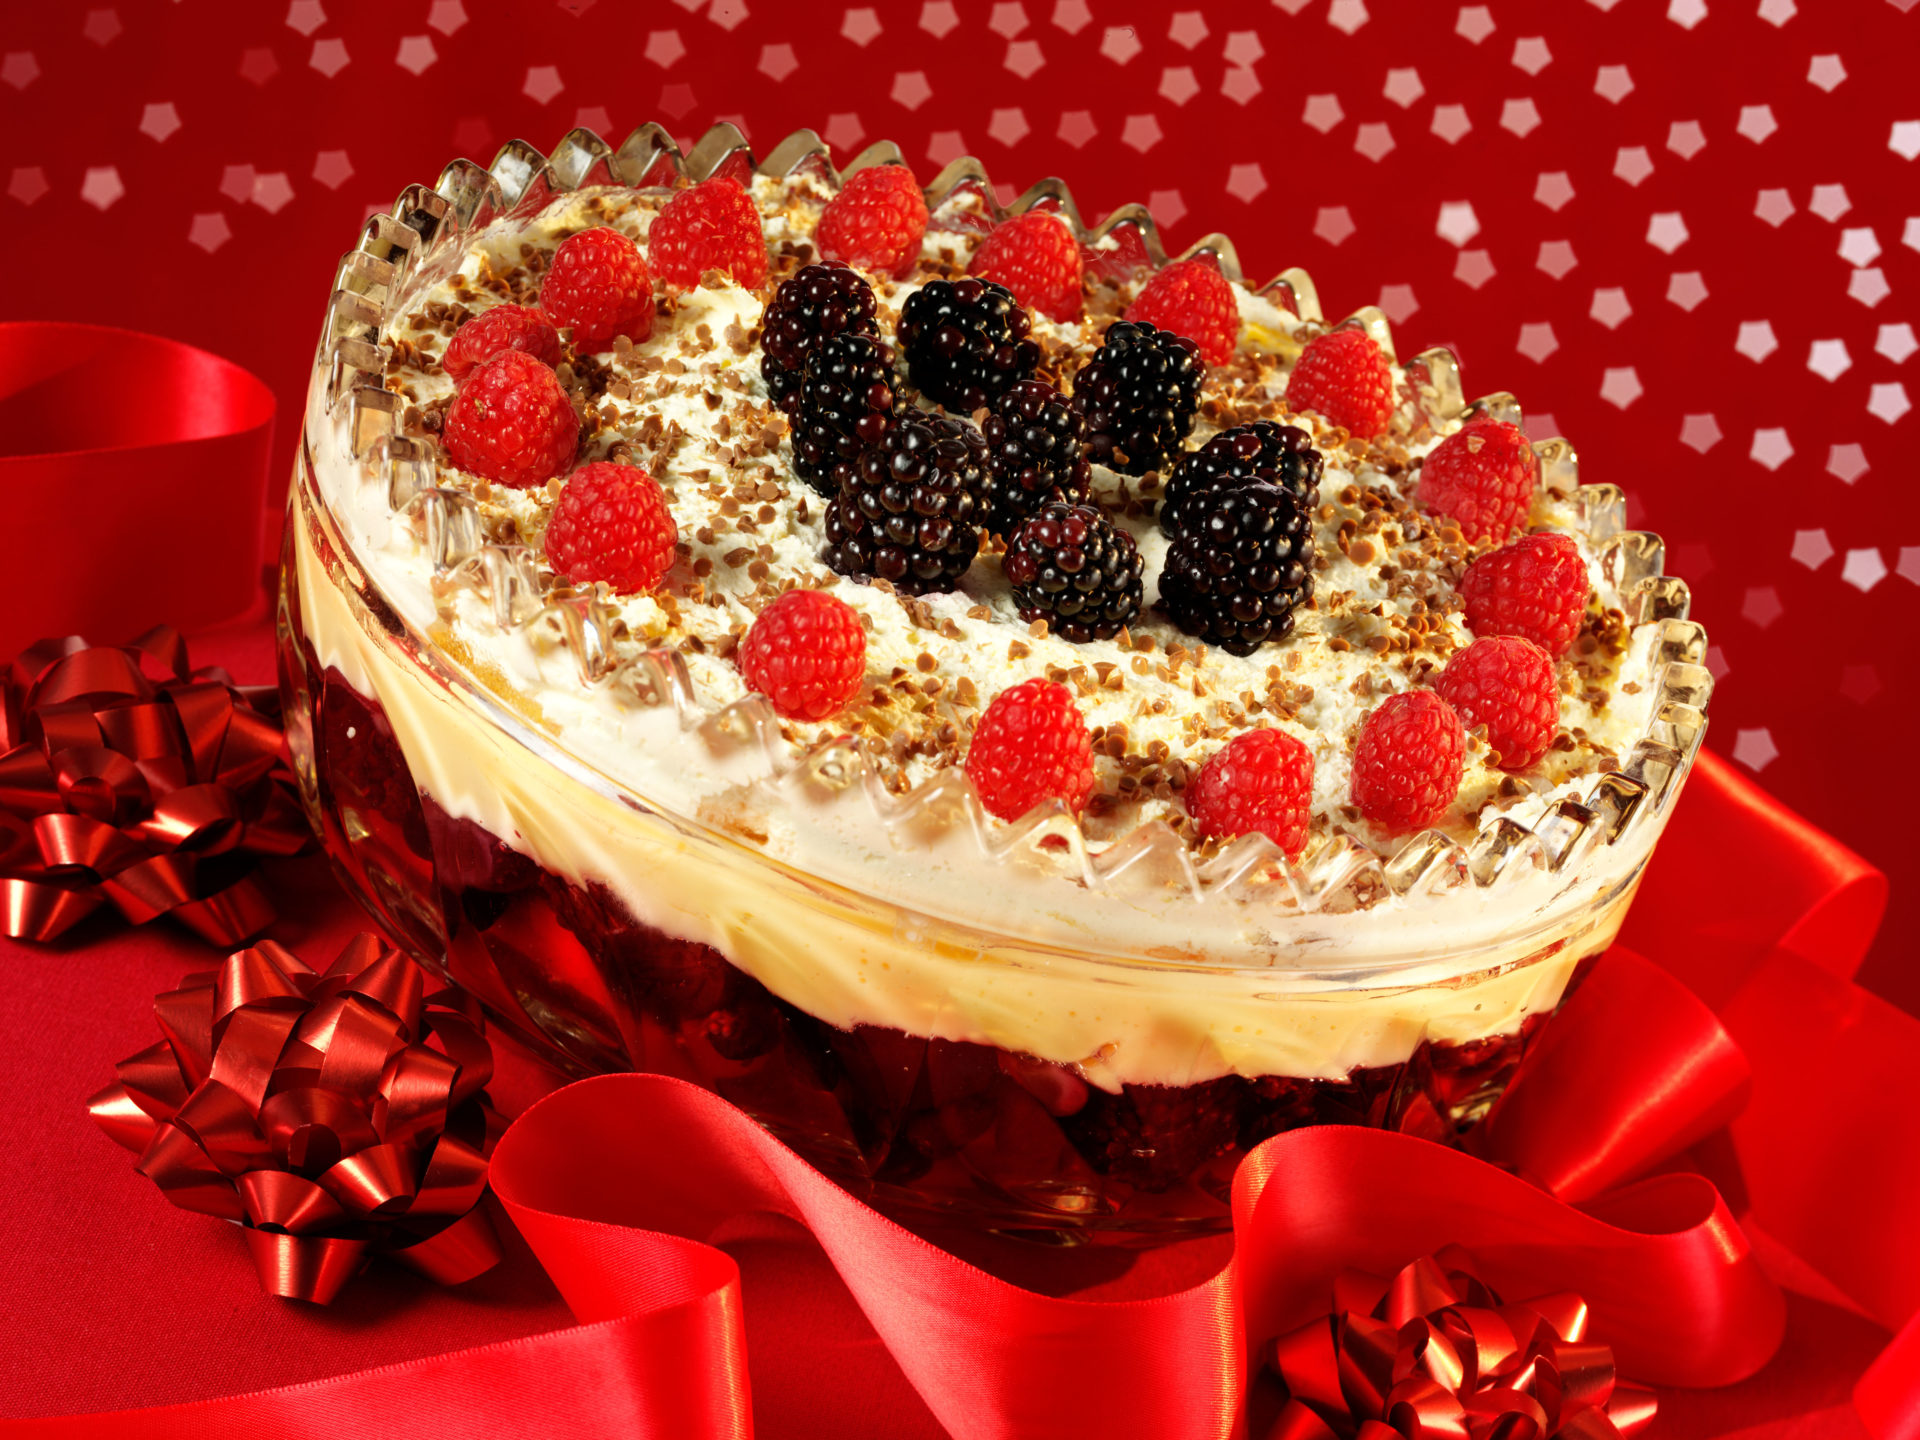 A traditional Christmas trifle